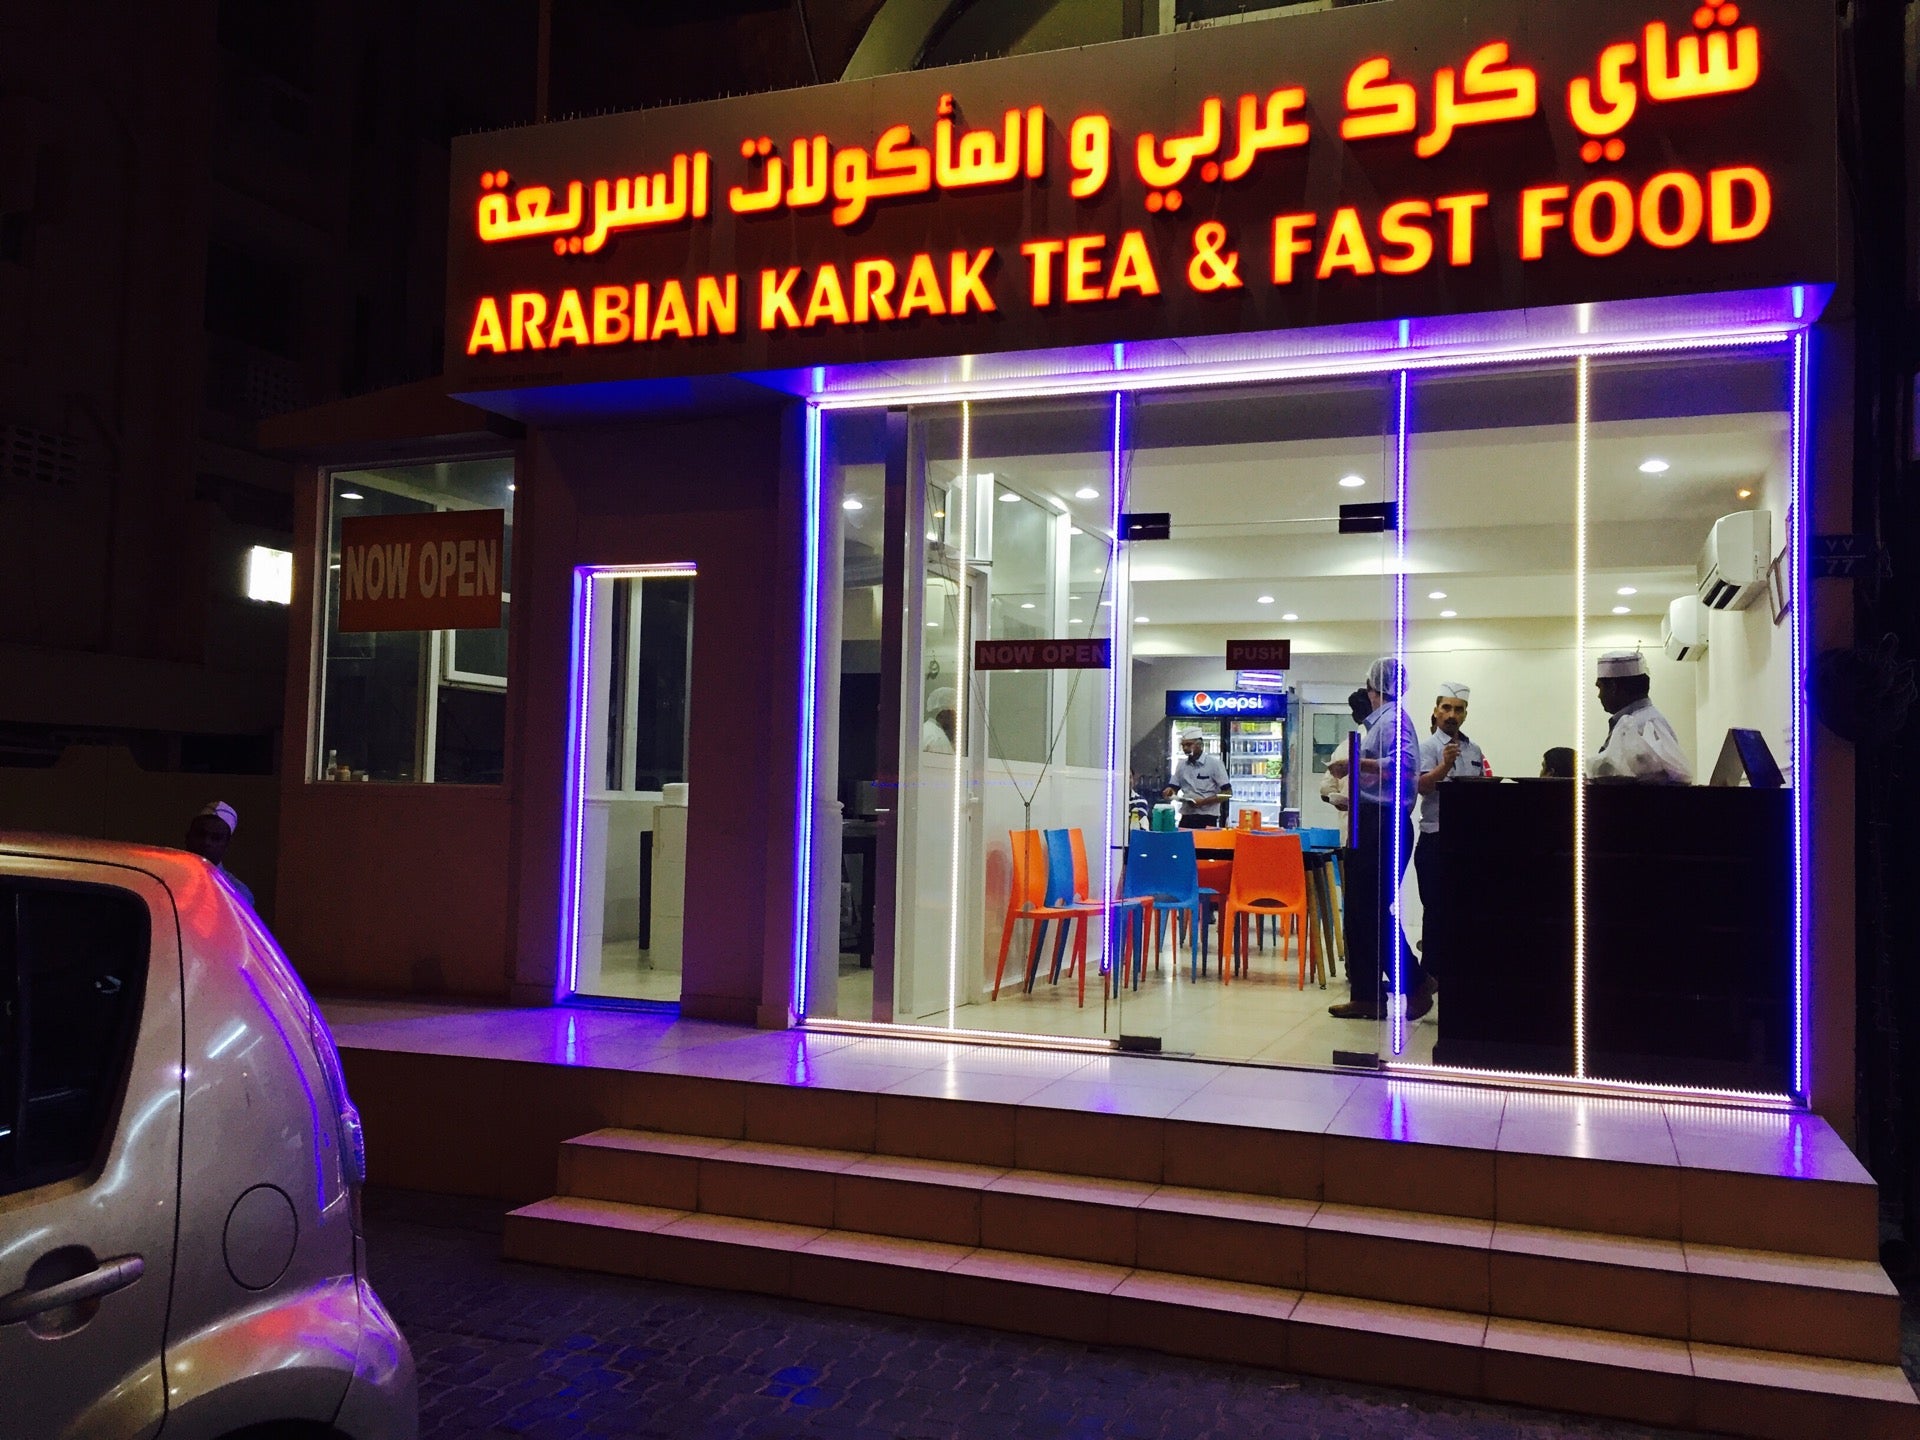 Arabian Karak Tea and Fast Food